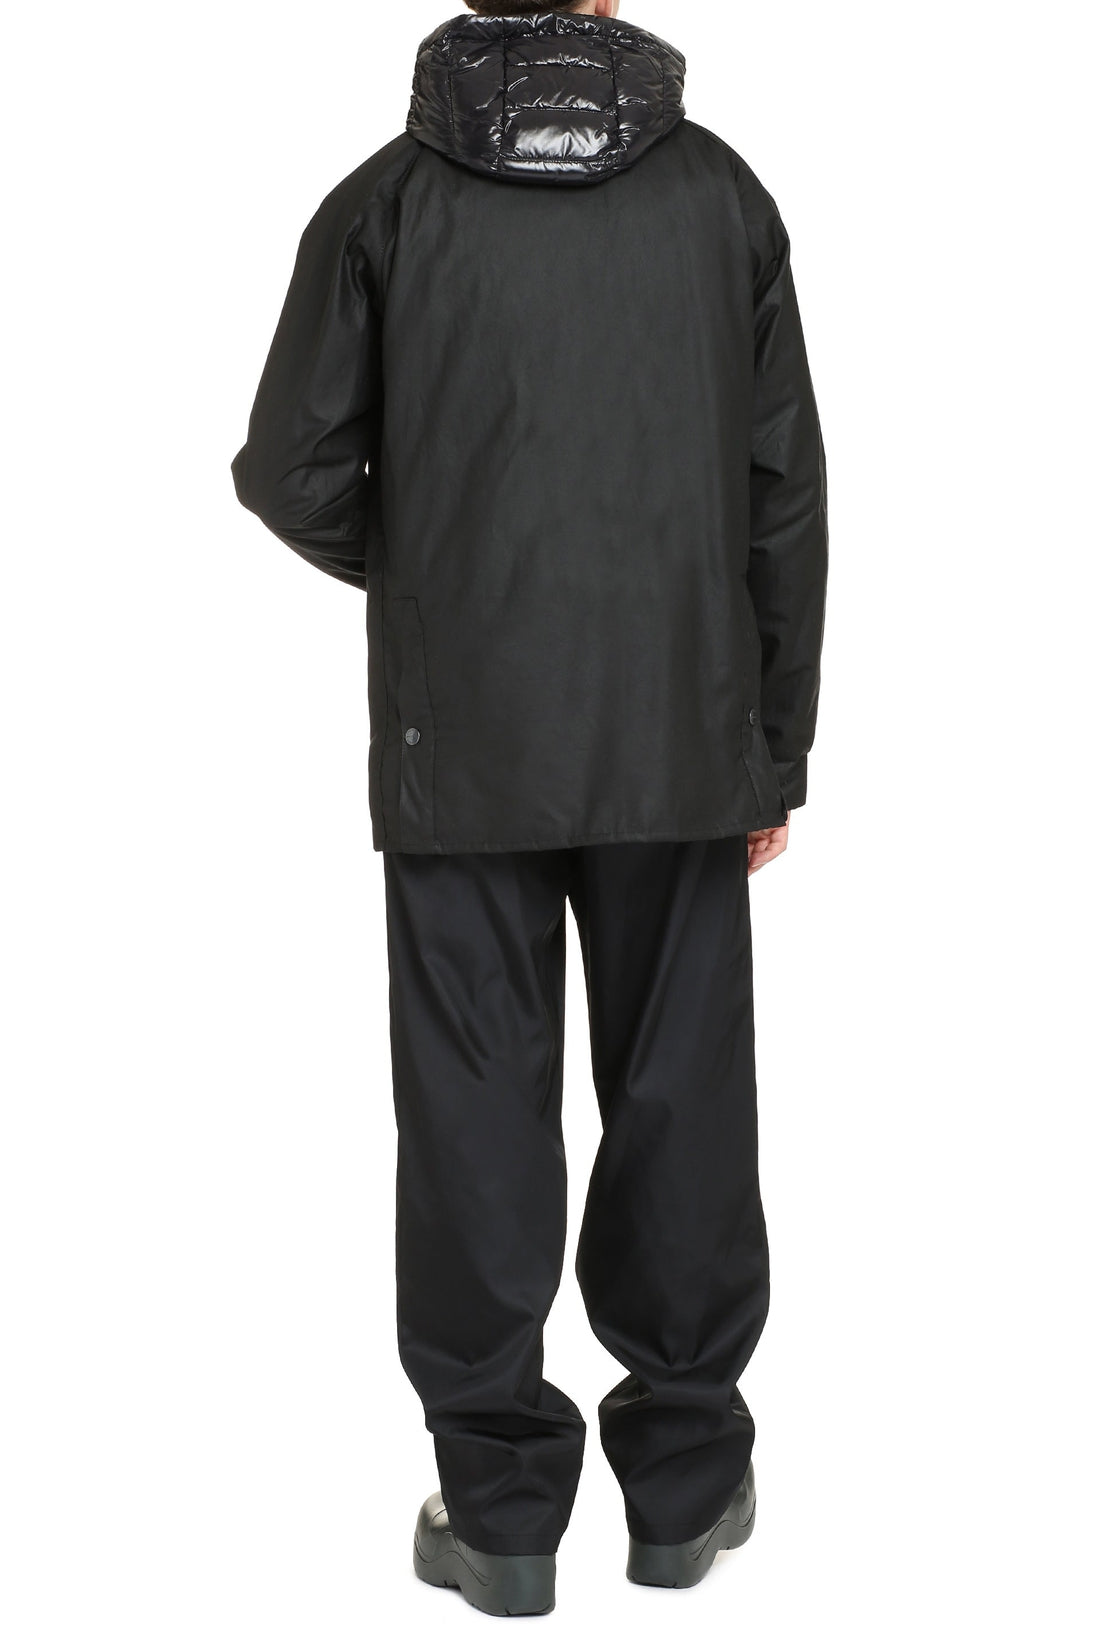 Moncler Genius-OUTLET-SALE-2 Moncler 1952 - Wight hooded short down jacket-ARCHIVIST